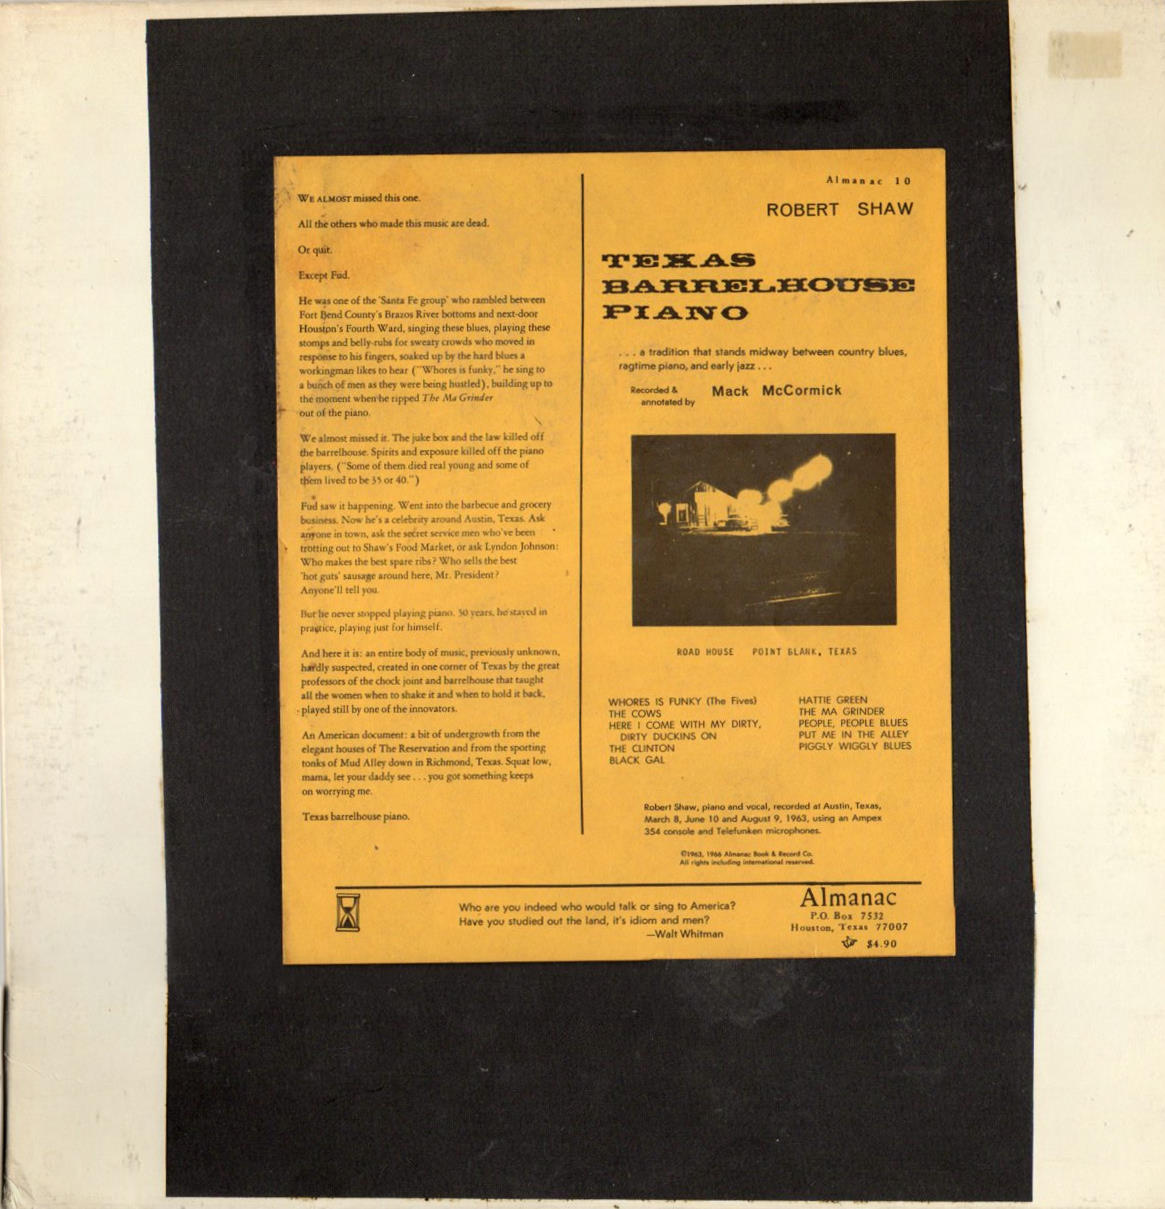 Mack McCormick's Almanac label LP of Robert Shaw 